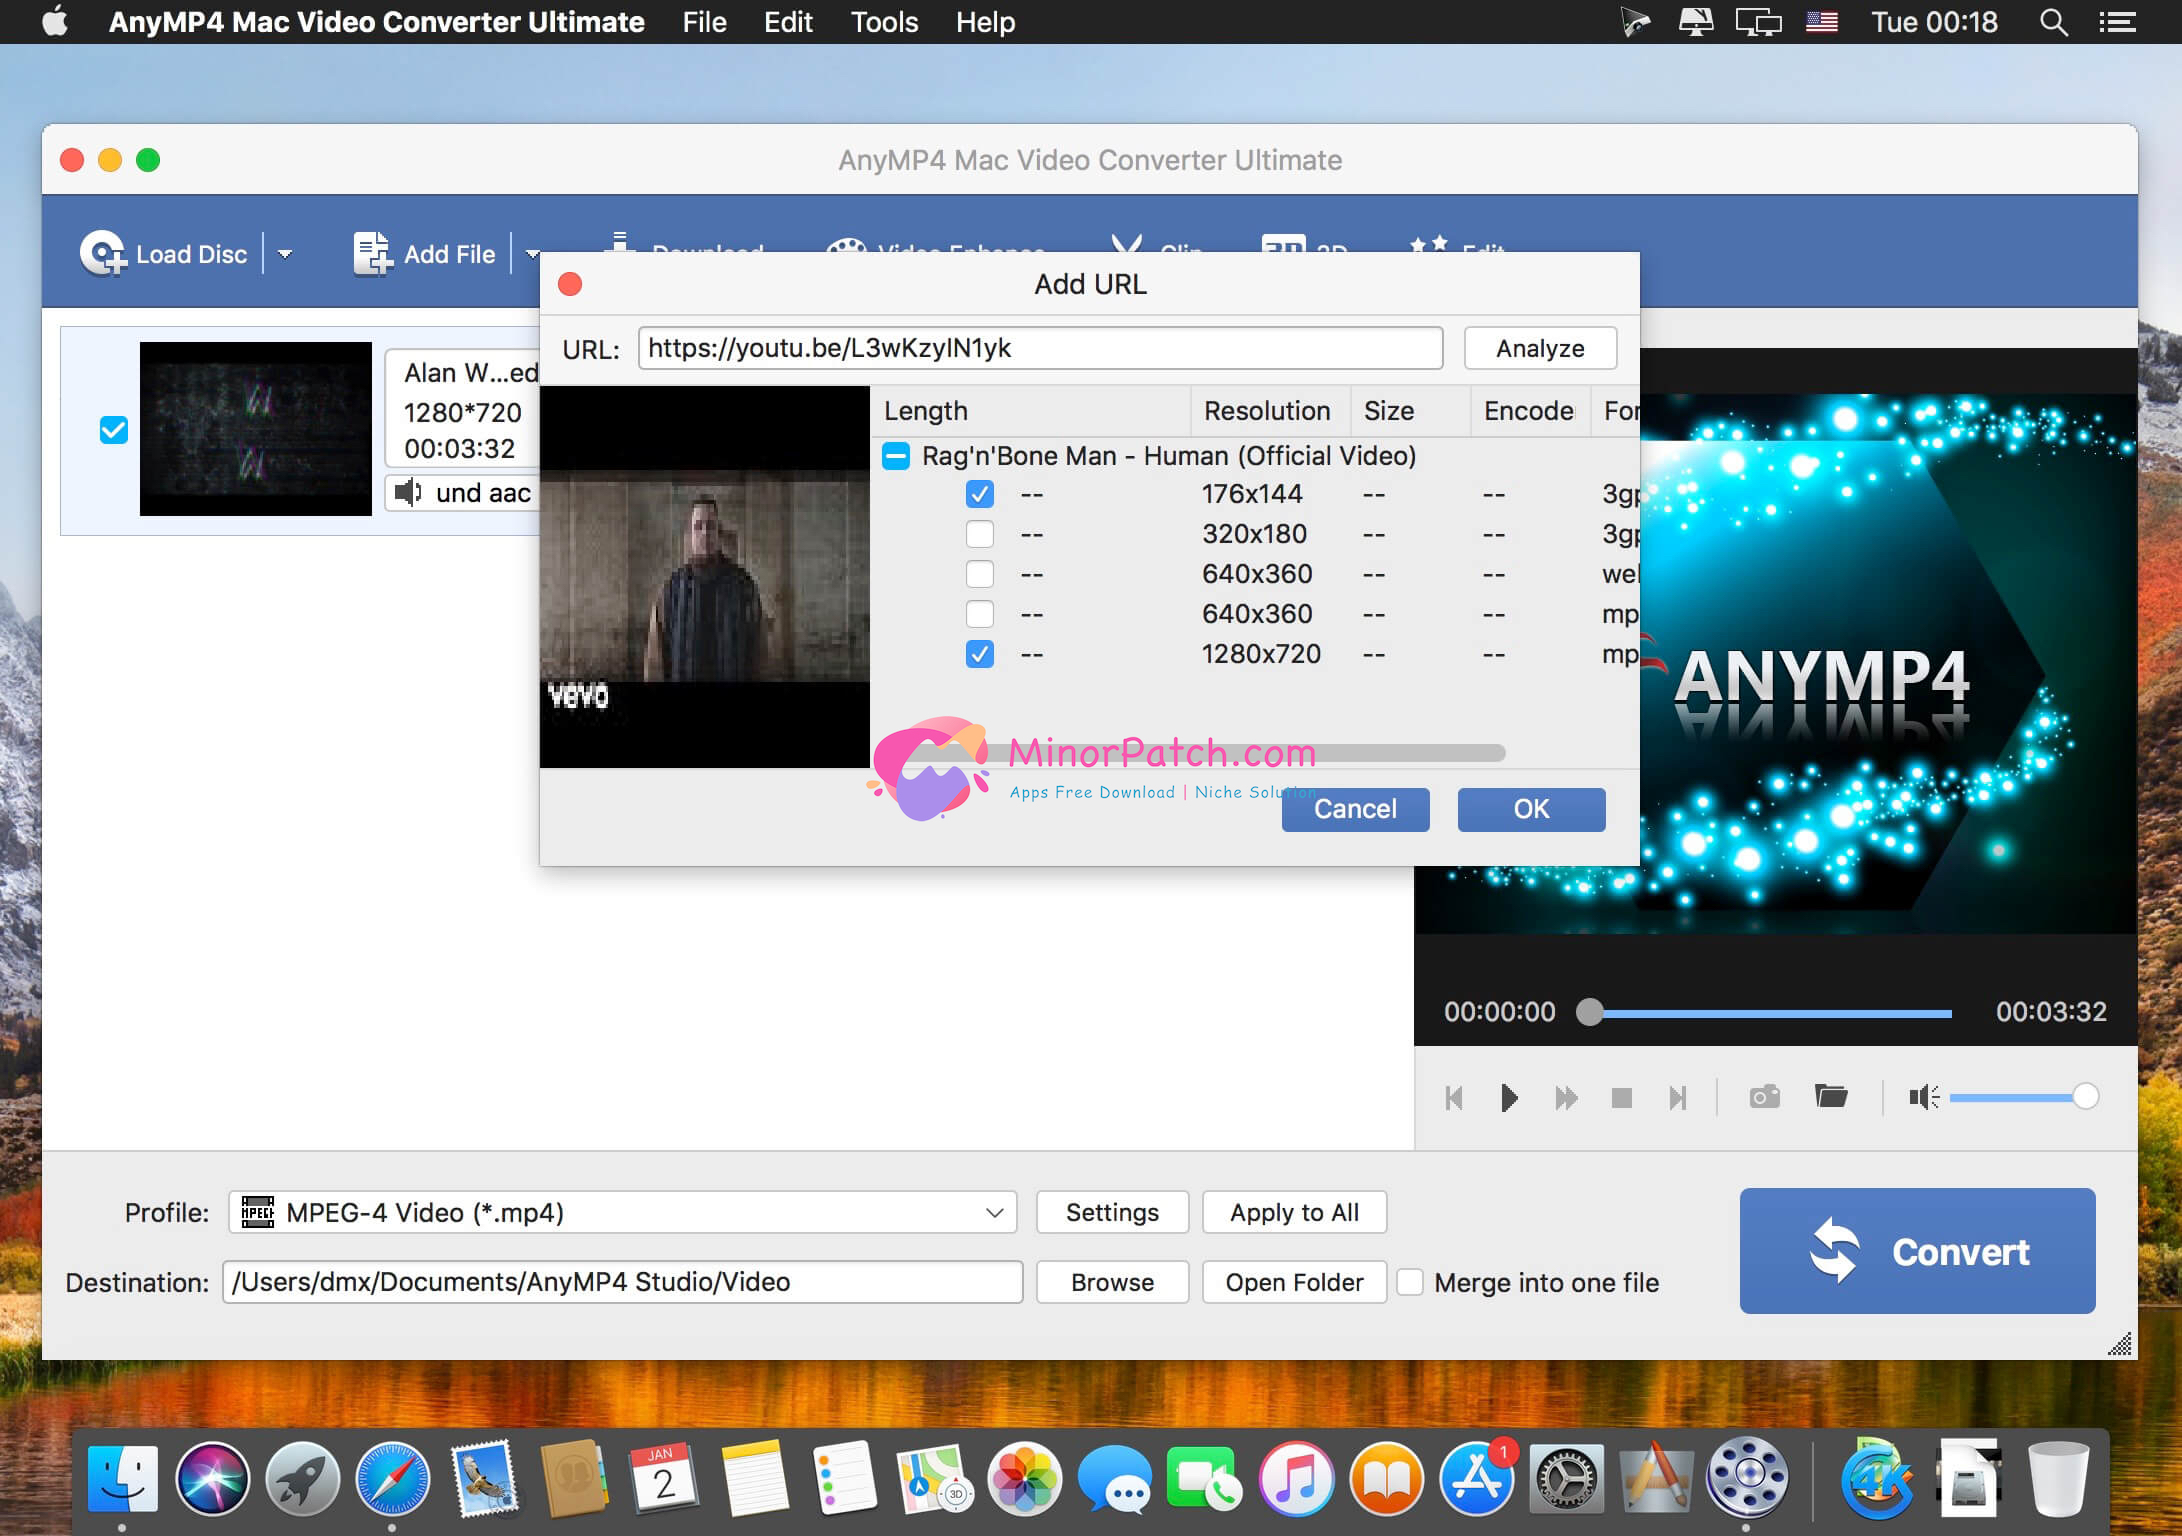 AnyMP4 Mac Video Converter Ultimate 8.2.12 Full Crack